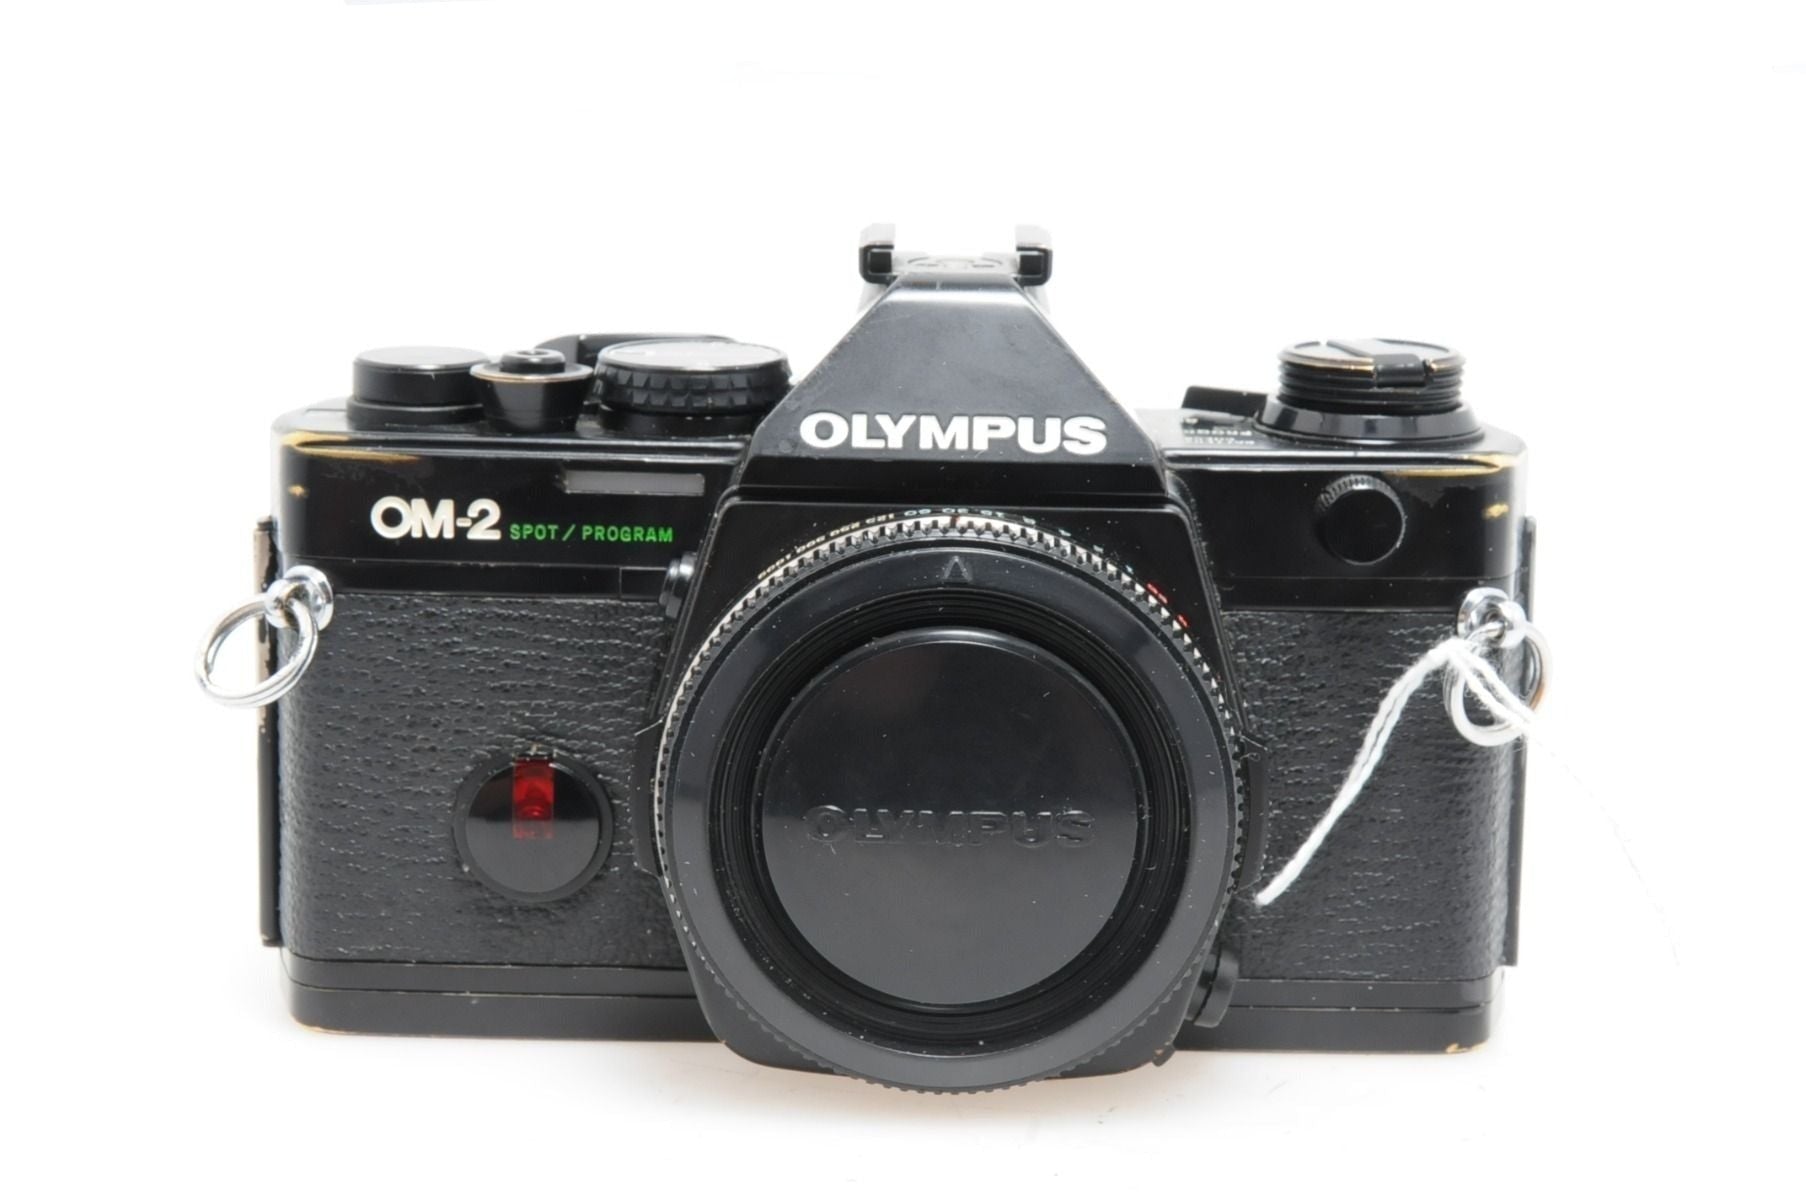 Product Image of Used Olympus OM-2 Spot Program film camera body (SH37017)